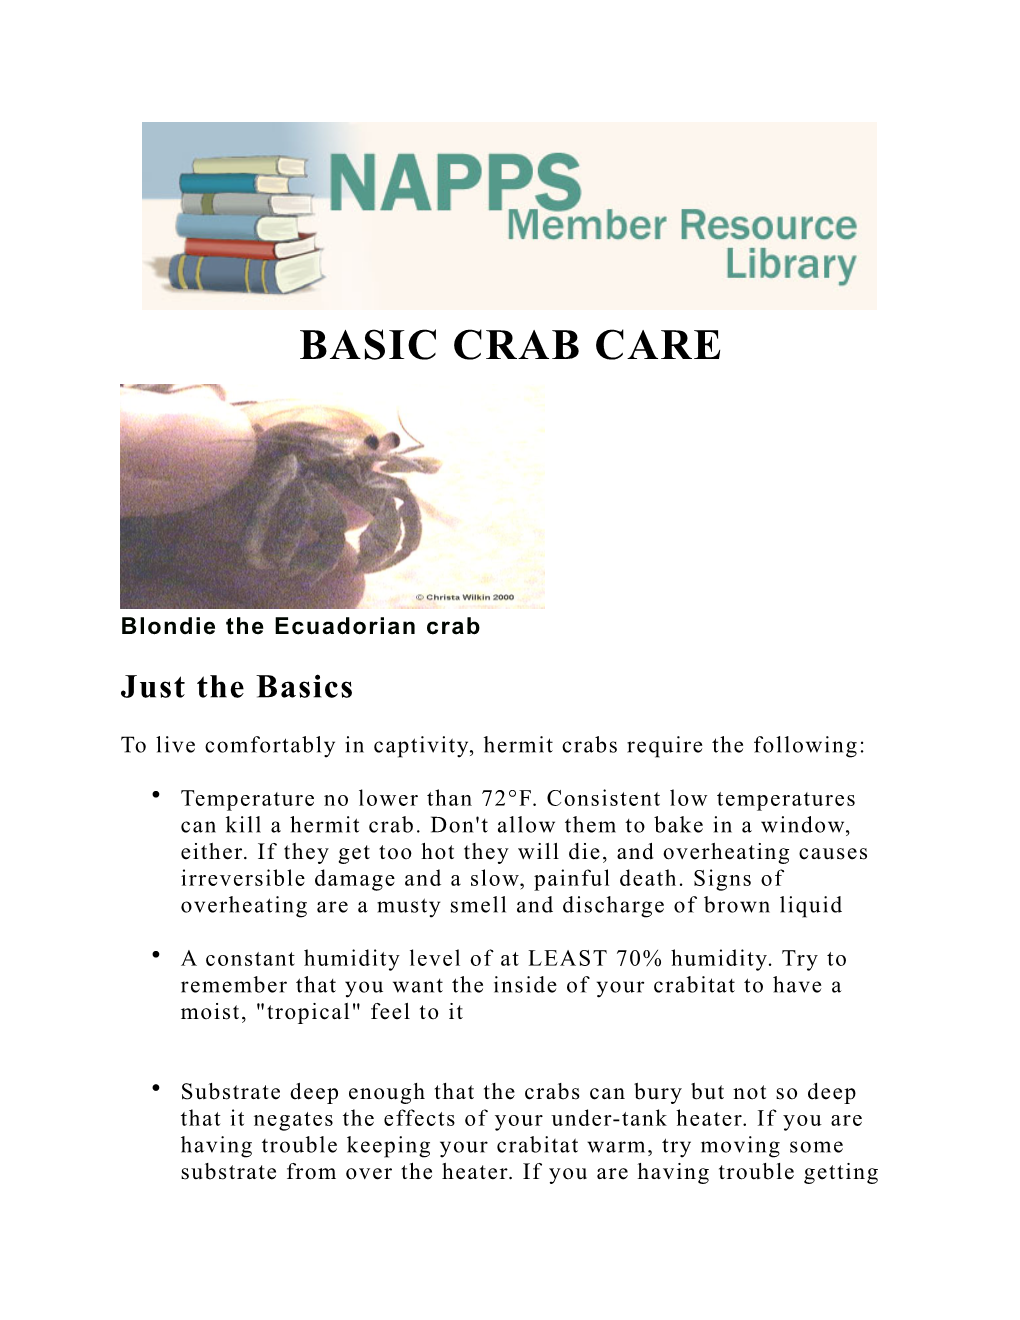 Basic Crab Care